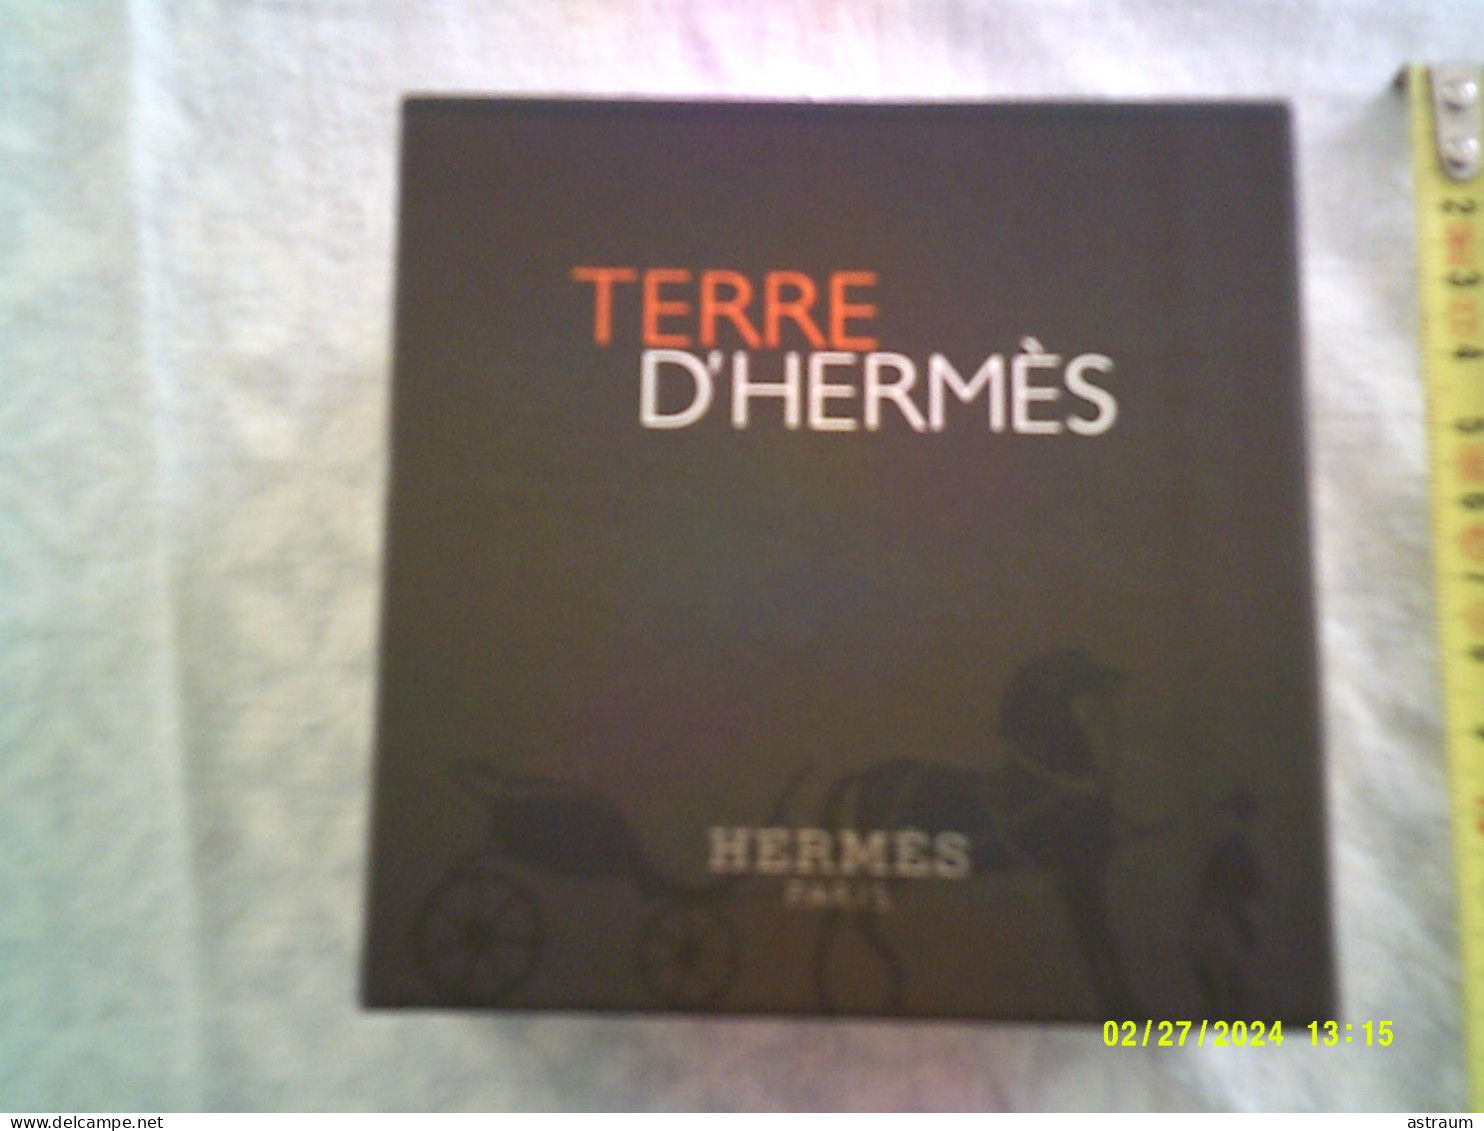 Coffret 2 Miniature Vaporisateur Parfum Hermes - EDT - Terre D'hermes Plein 12,5ml + Tube Emulsion Apres Rasage 15ml - Mignon Di Profumo Uomo (con Box)